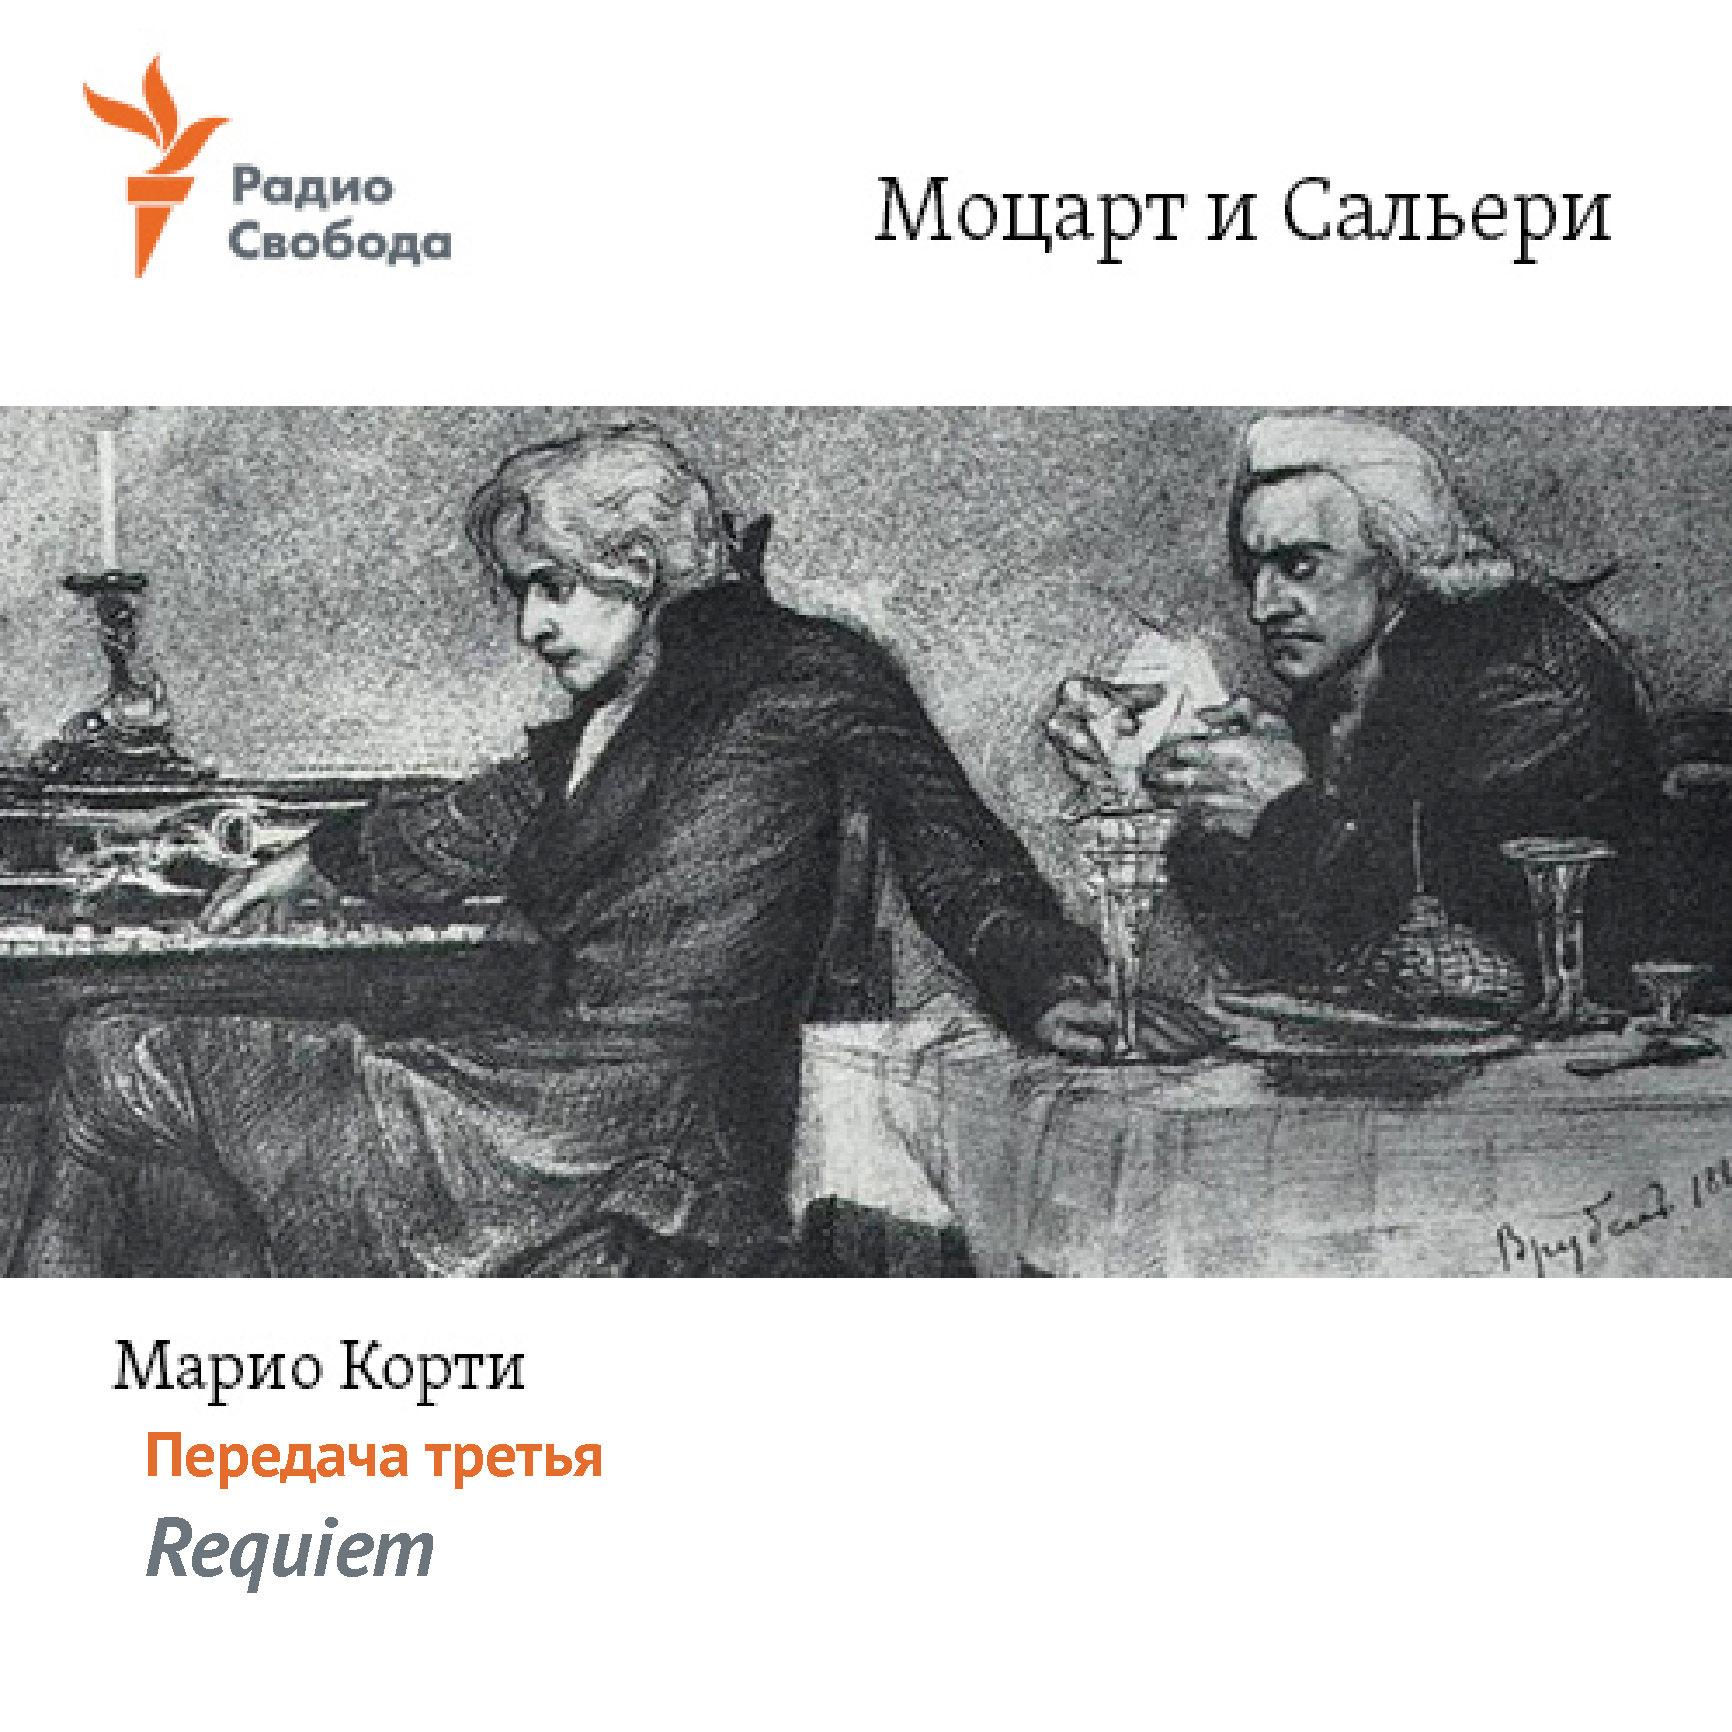 Марио Корти Моцарт и Сальери. Передача третья – Requiem